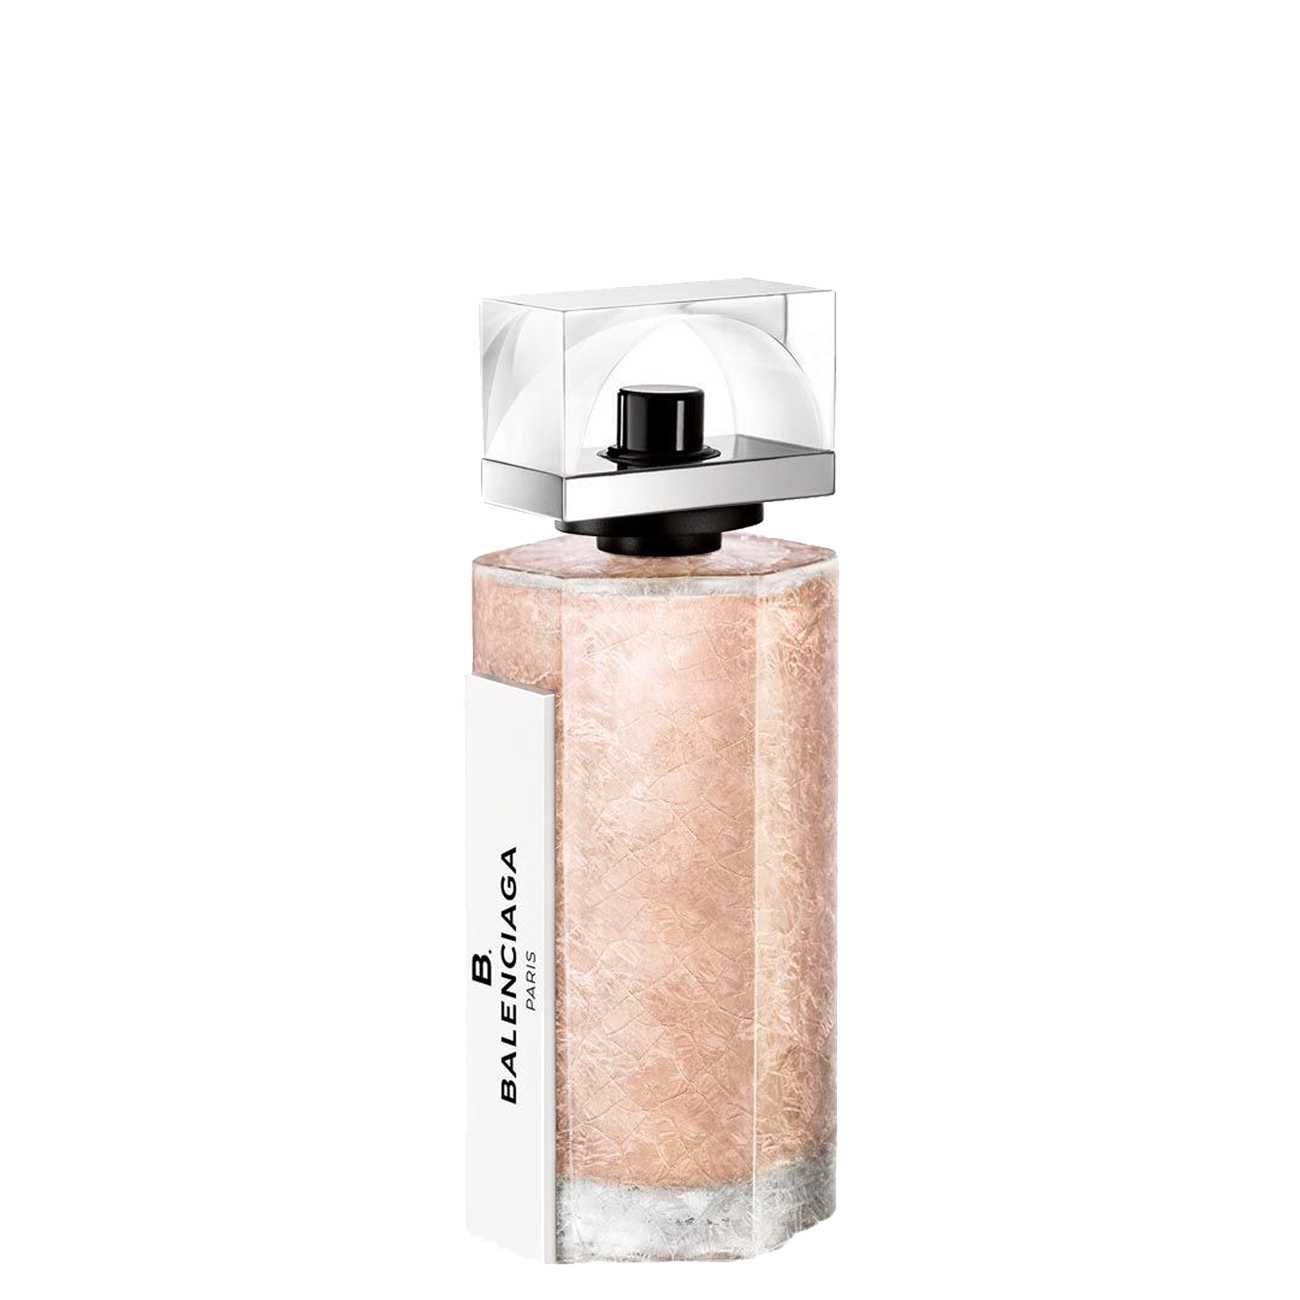 Apa de Parfum Balenciaga “B” 75ml cu comanda online